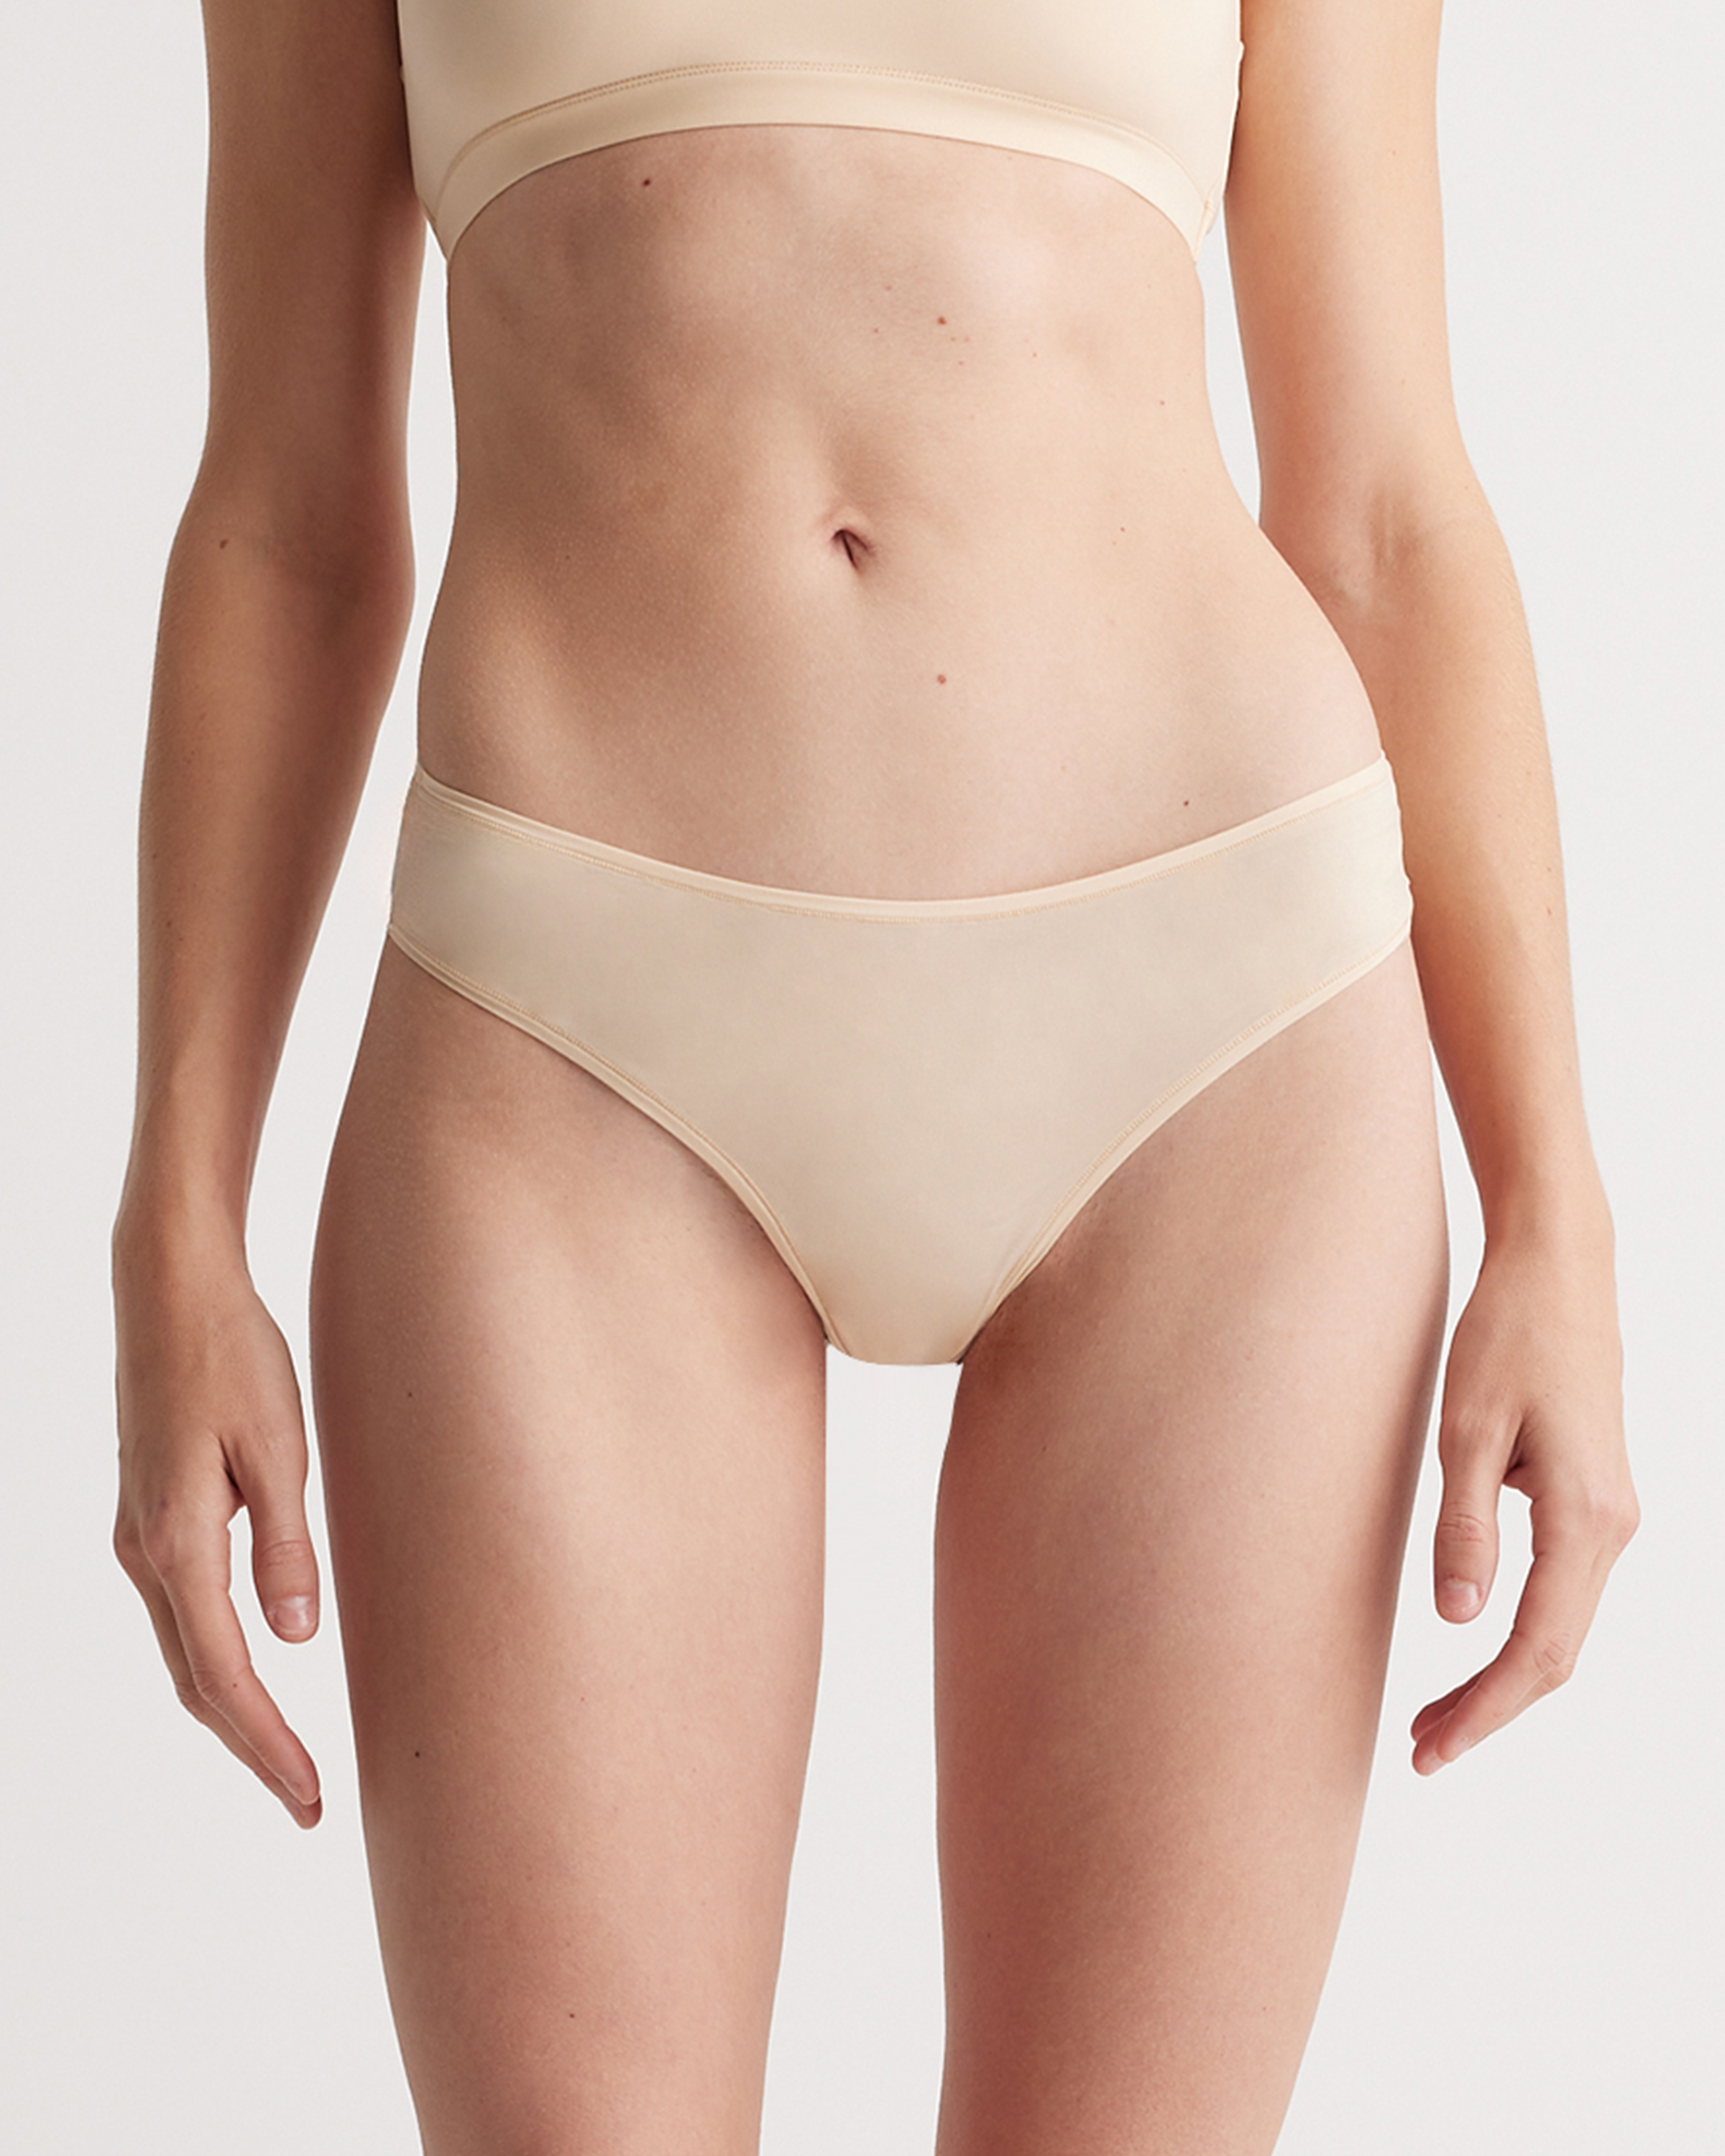 Low rise underwear in super stretch organic cotton - Beige